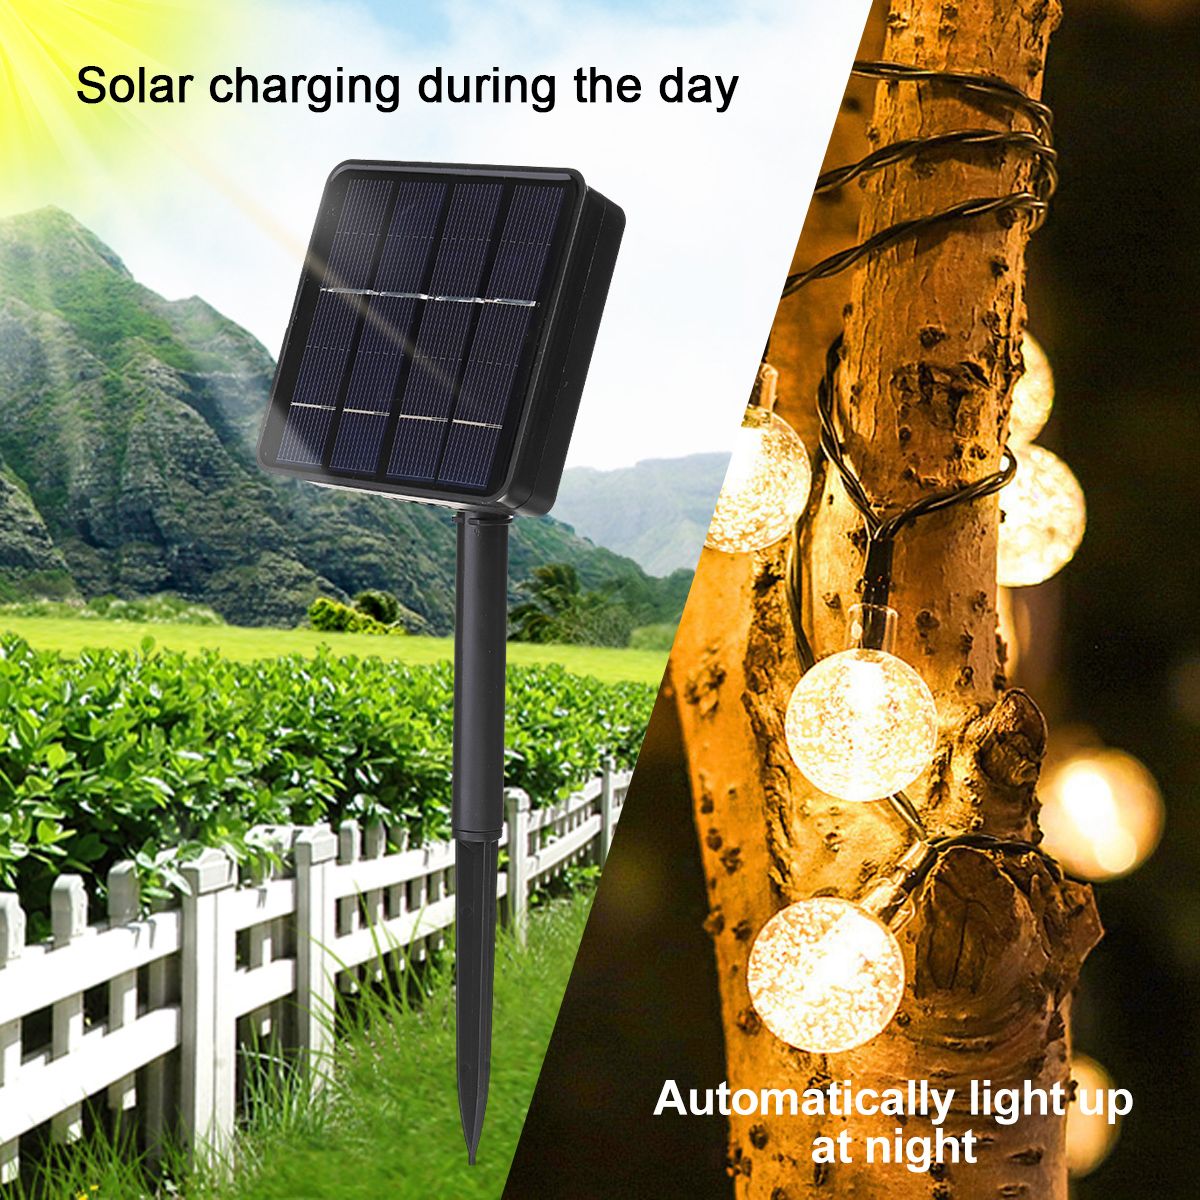 571222M-Solar-Powered-LED-String-Light-strip-Waterproof-Outdoor-Garden-Decor-1751657